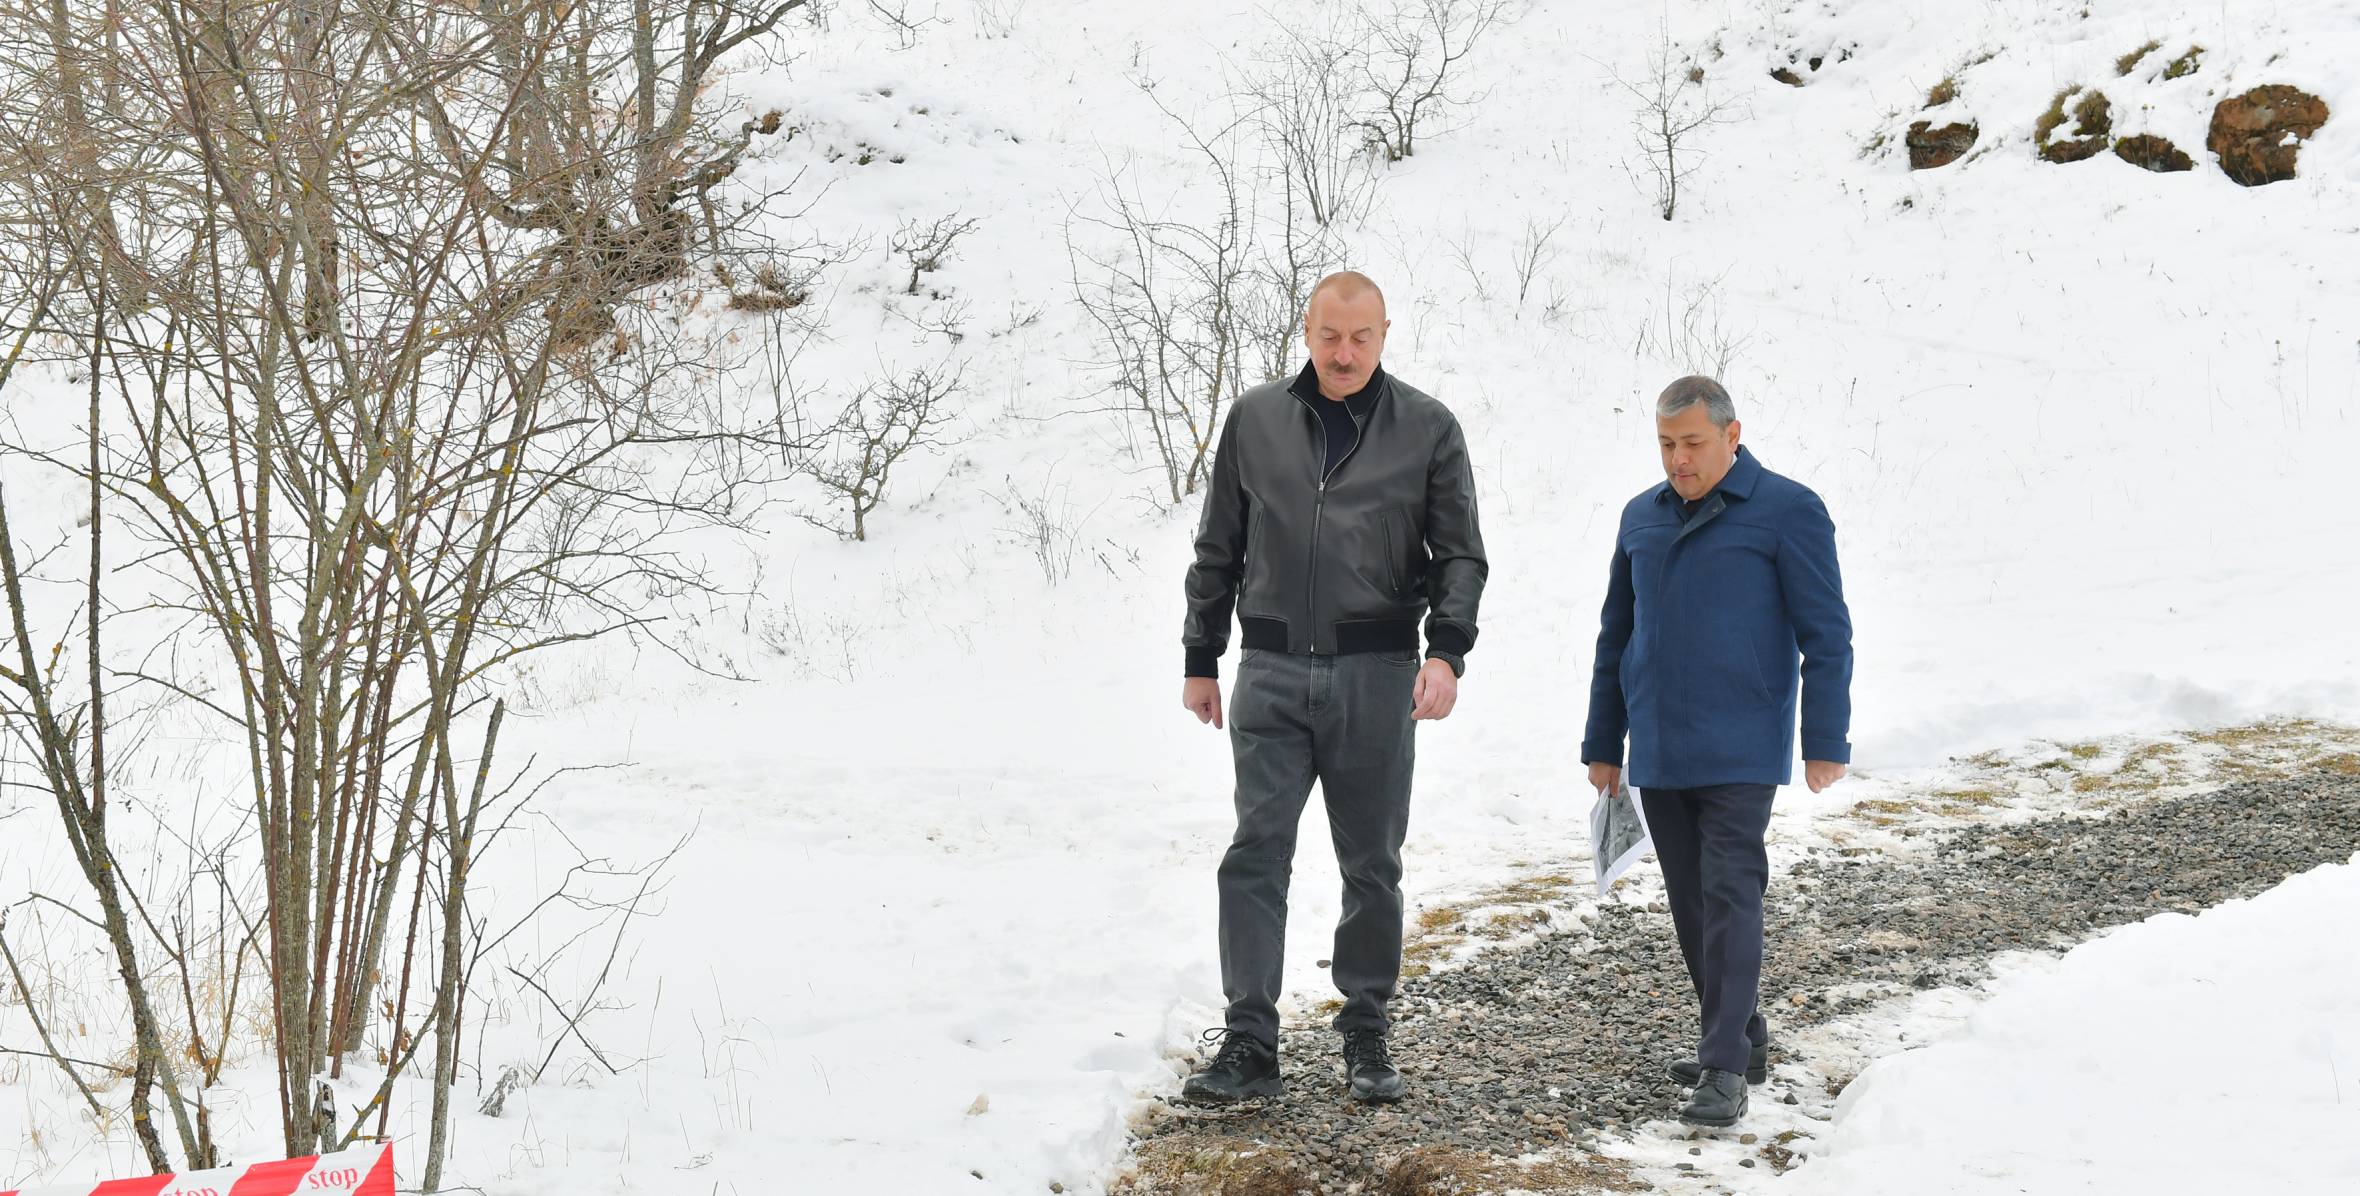 Ilham Aliyev has visited the Turshsu Spring in the Shusha district